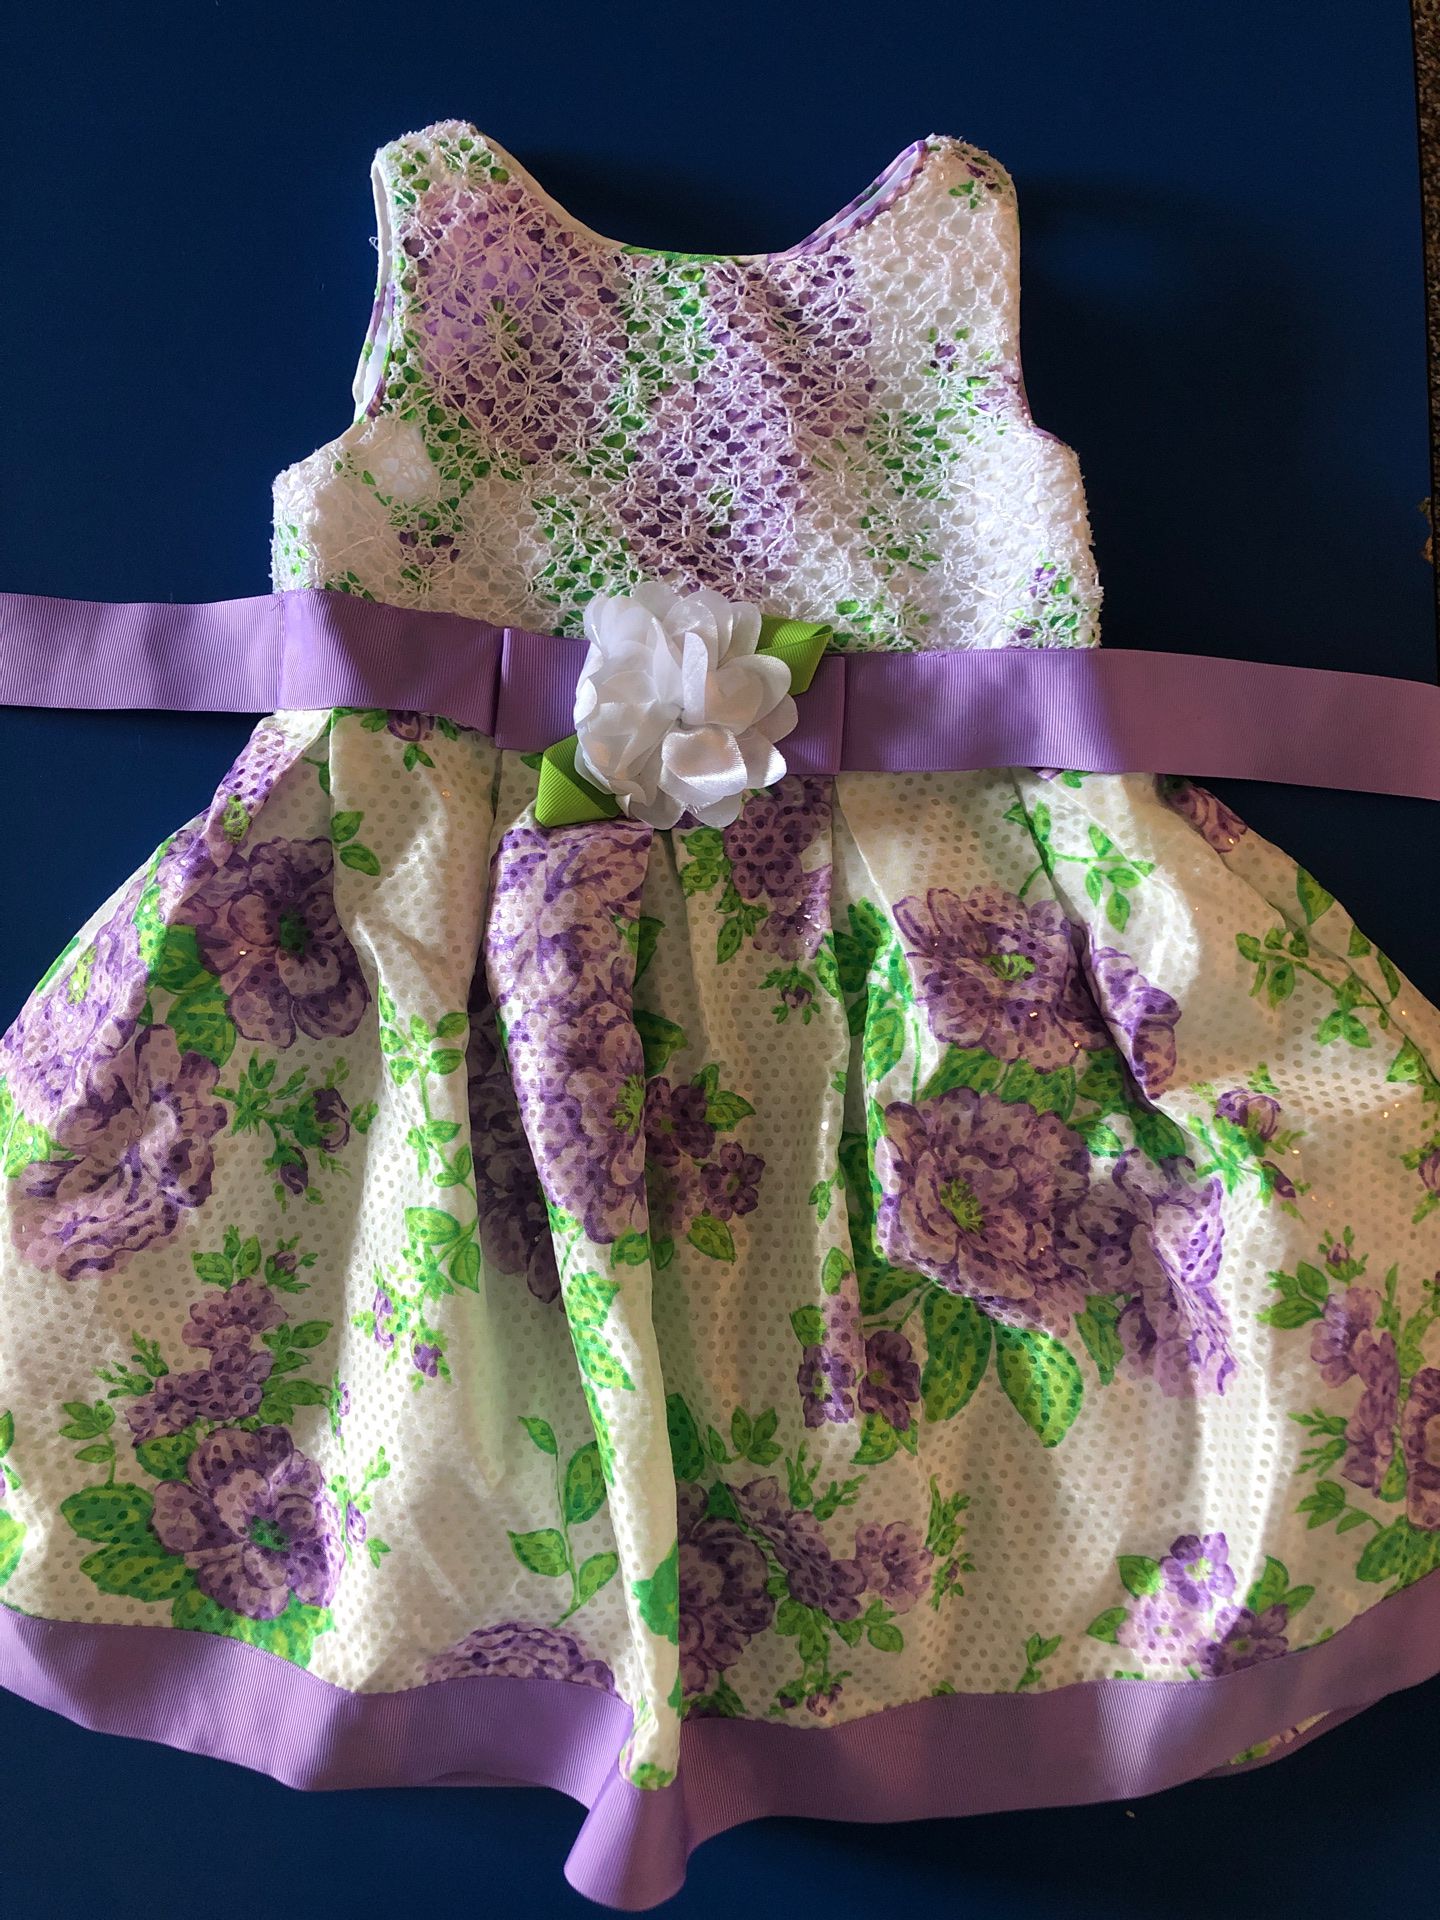 Purple Flowered Dress